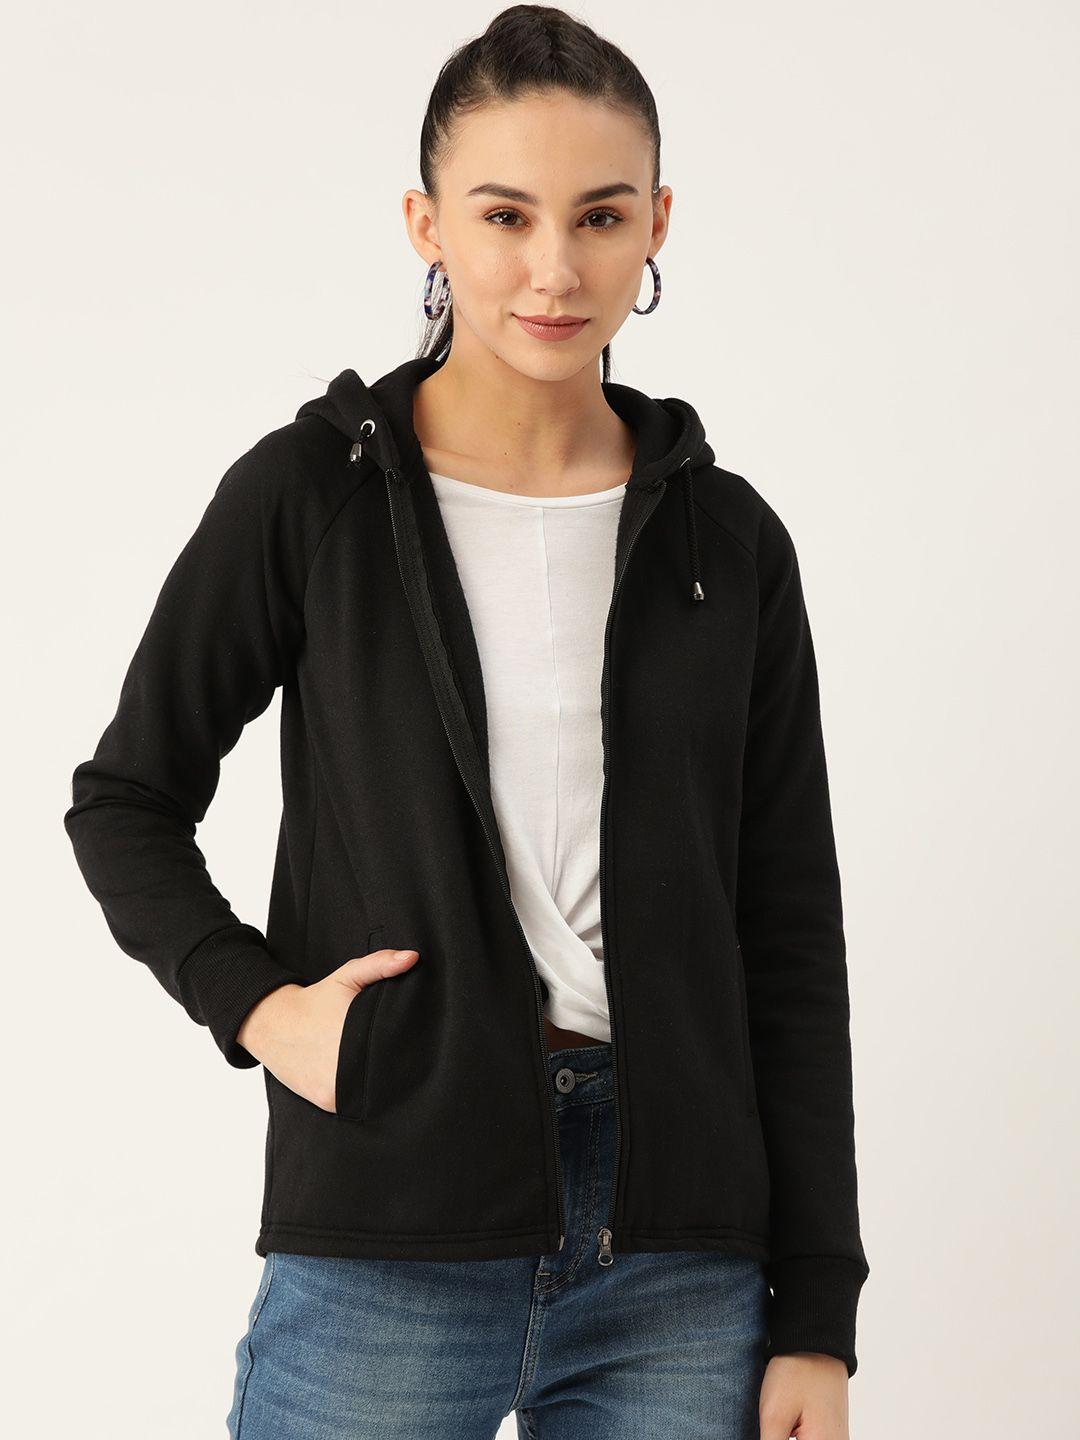 alsace lorraine paris women black solid hooded sweatshirt